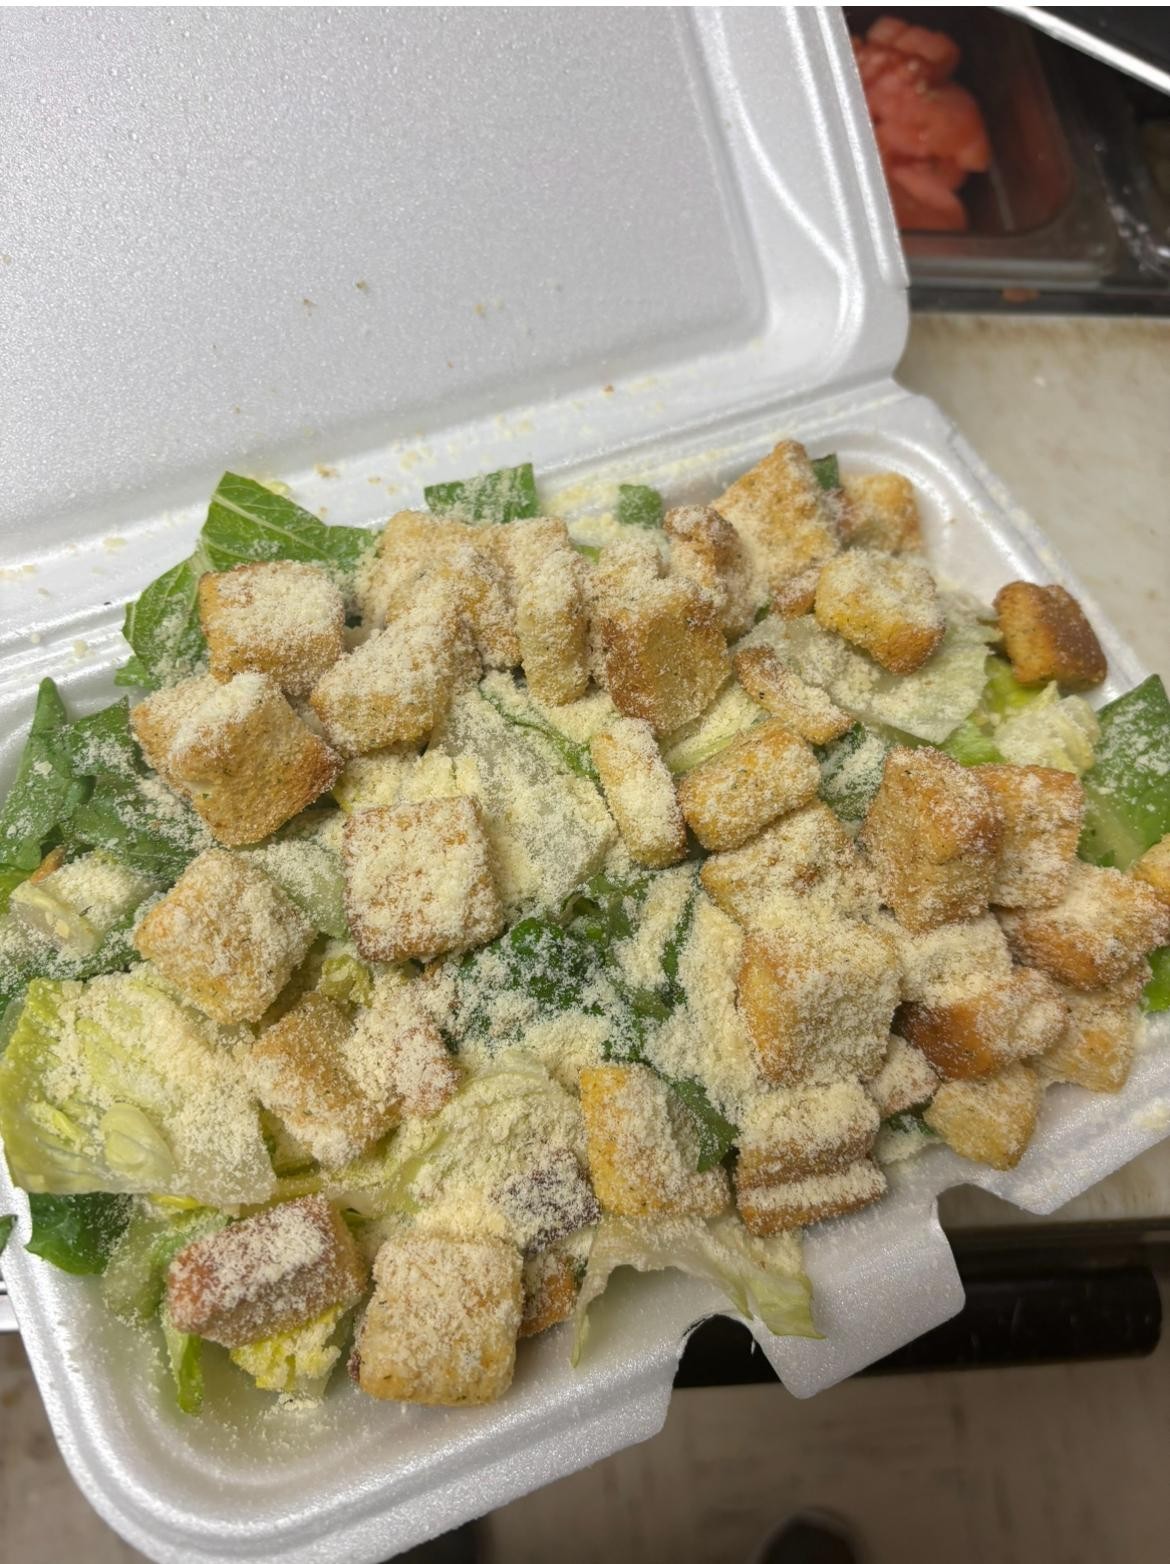 Ray's Large Caesar Salad